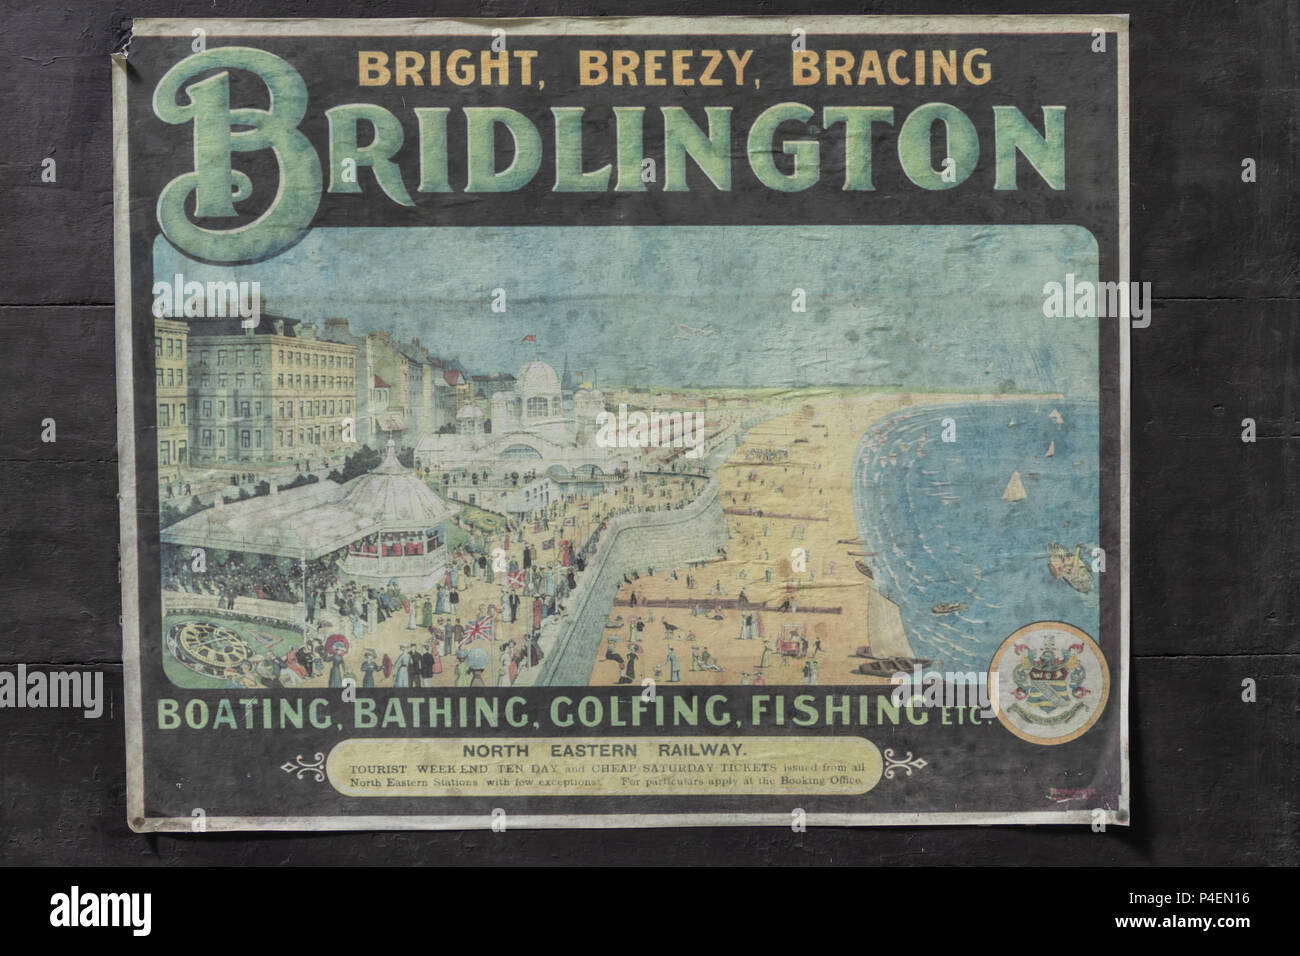 Hell, luftig, Verstrebungen Bridlington Vintage Poster an der Wand Bei der Great Central Railway Station in Rothley, Leicestershire Stockfoto